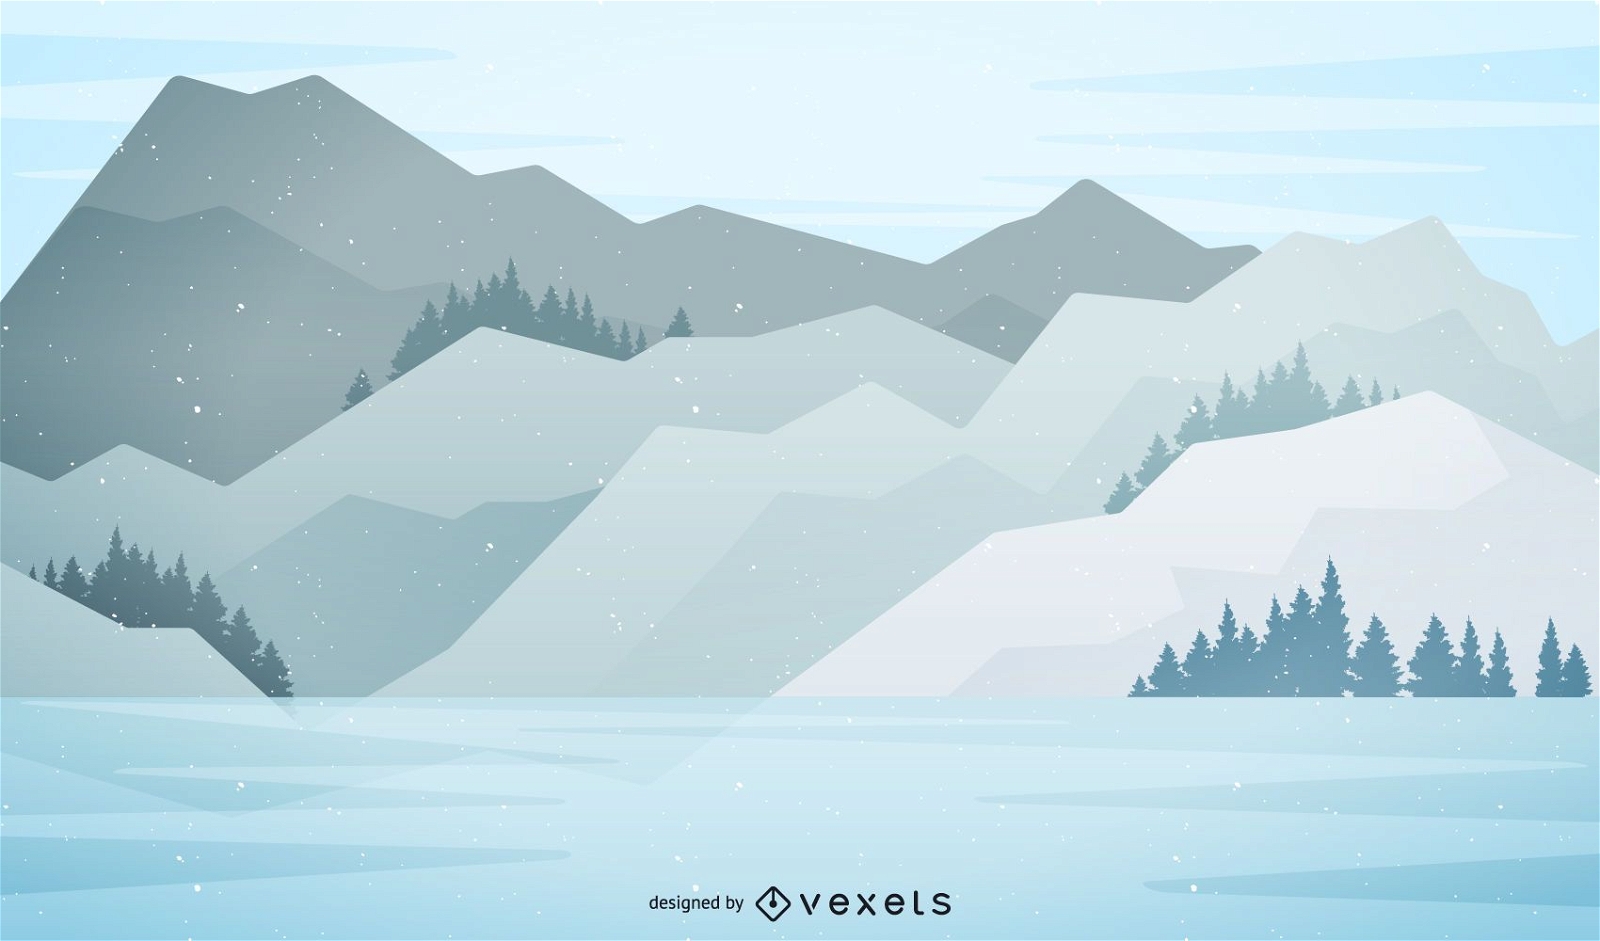 Snowy mountain landscape illustration